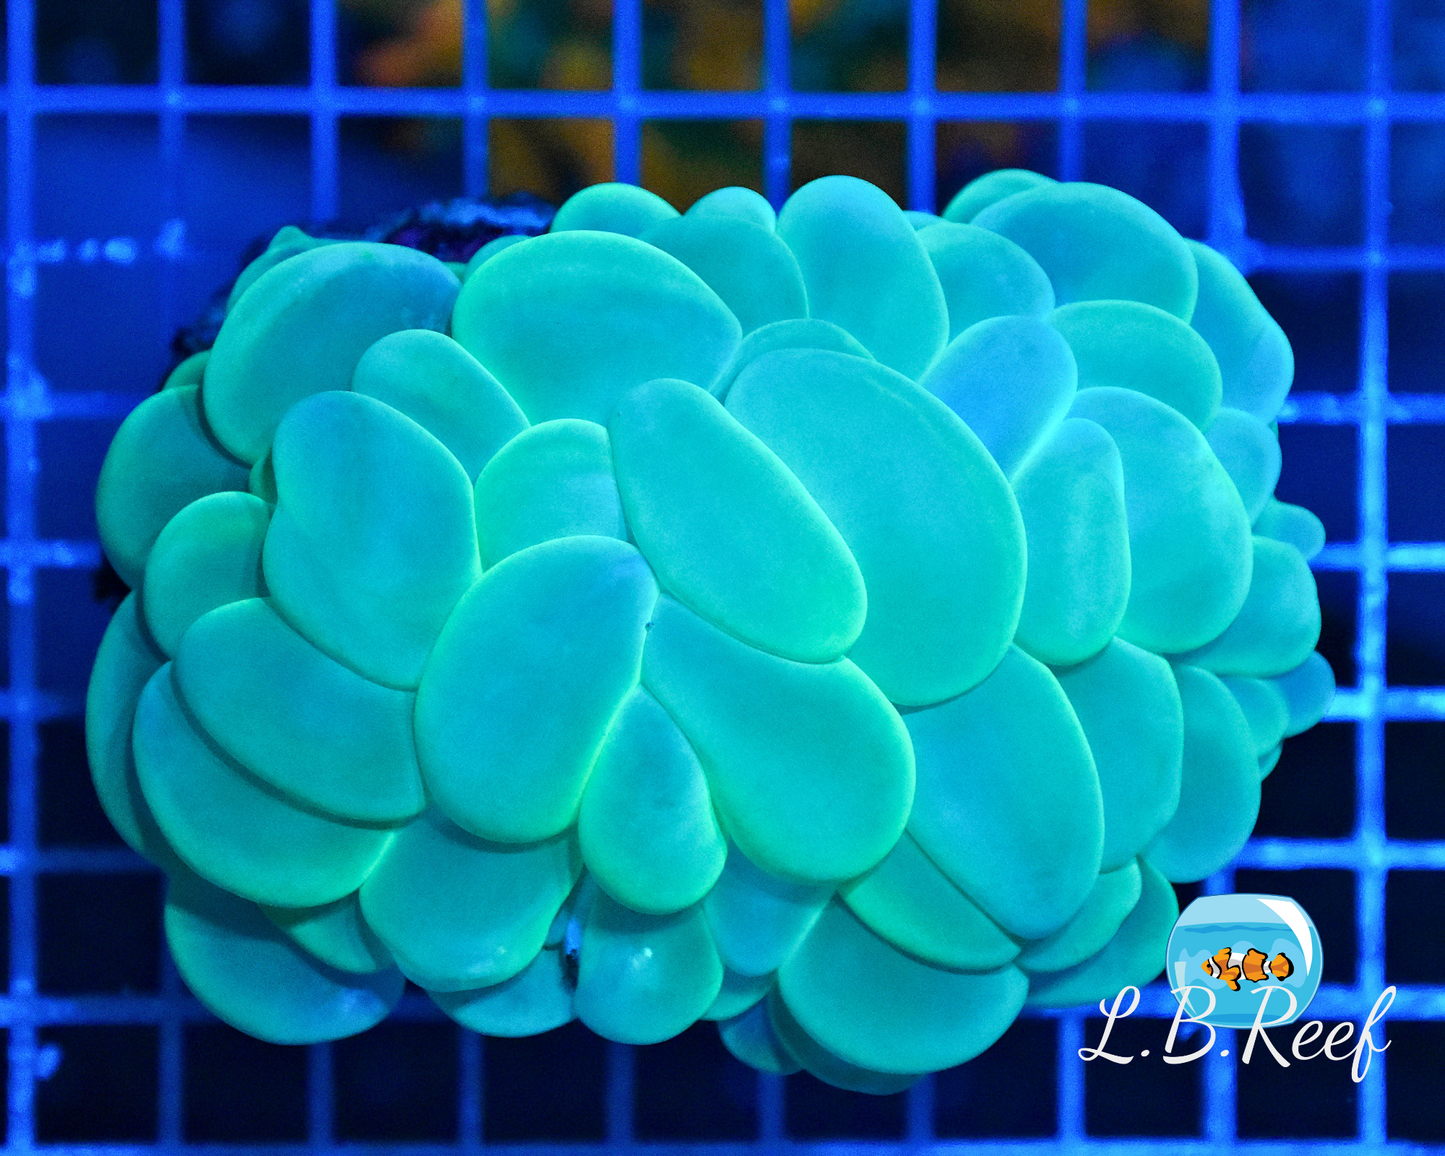 Plerogyra sinuosa "Neon Green" - L.B.Reef